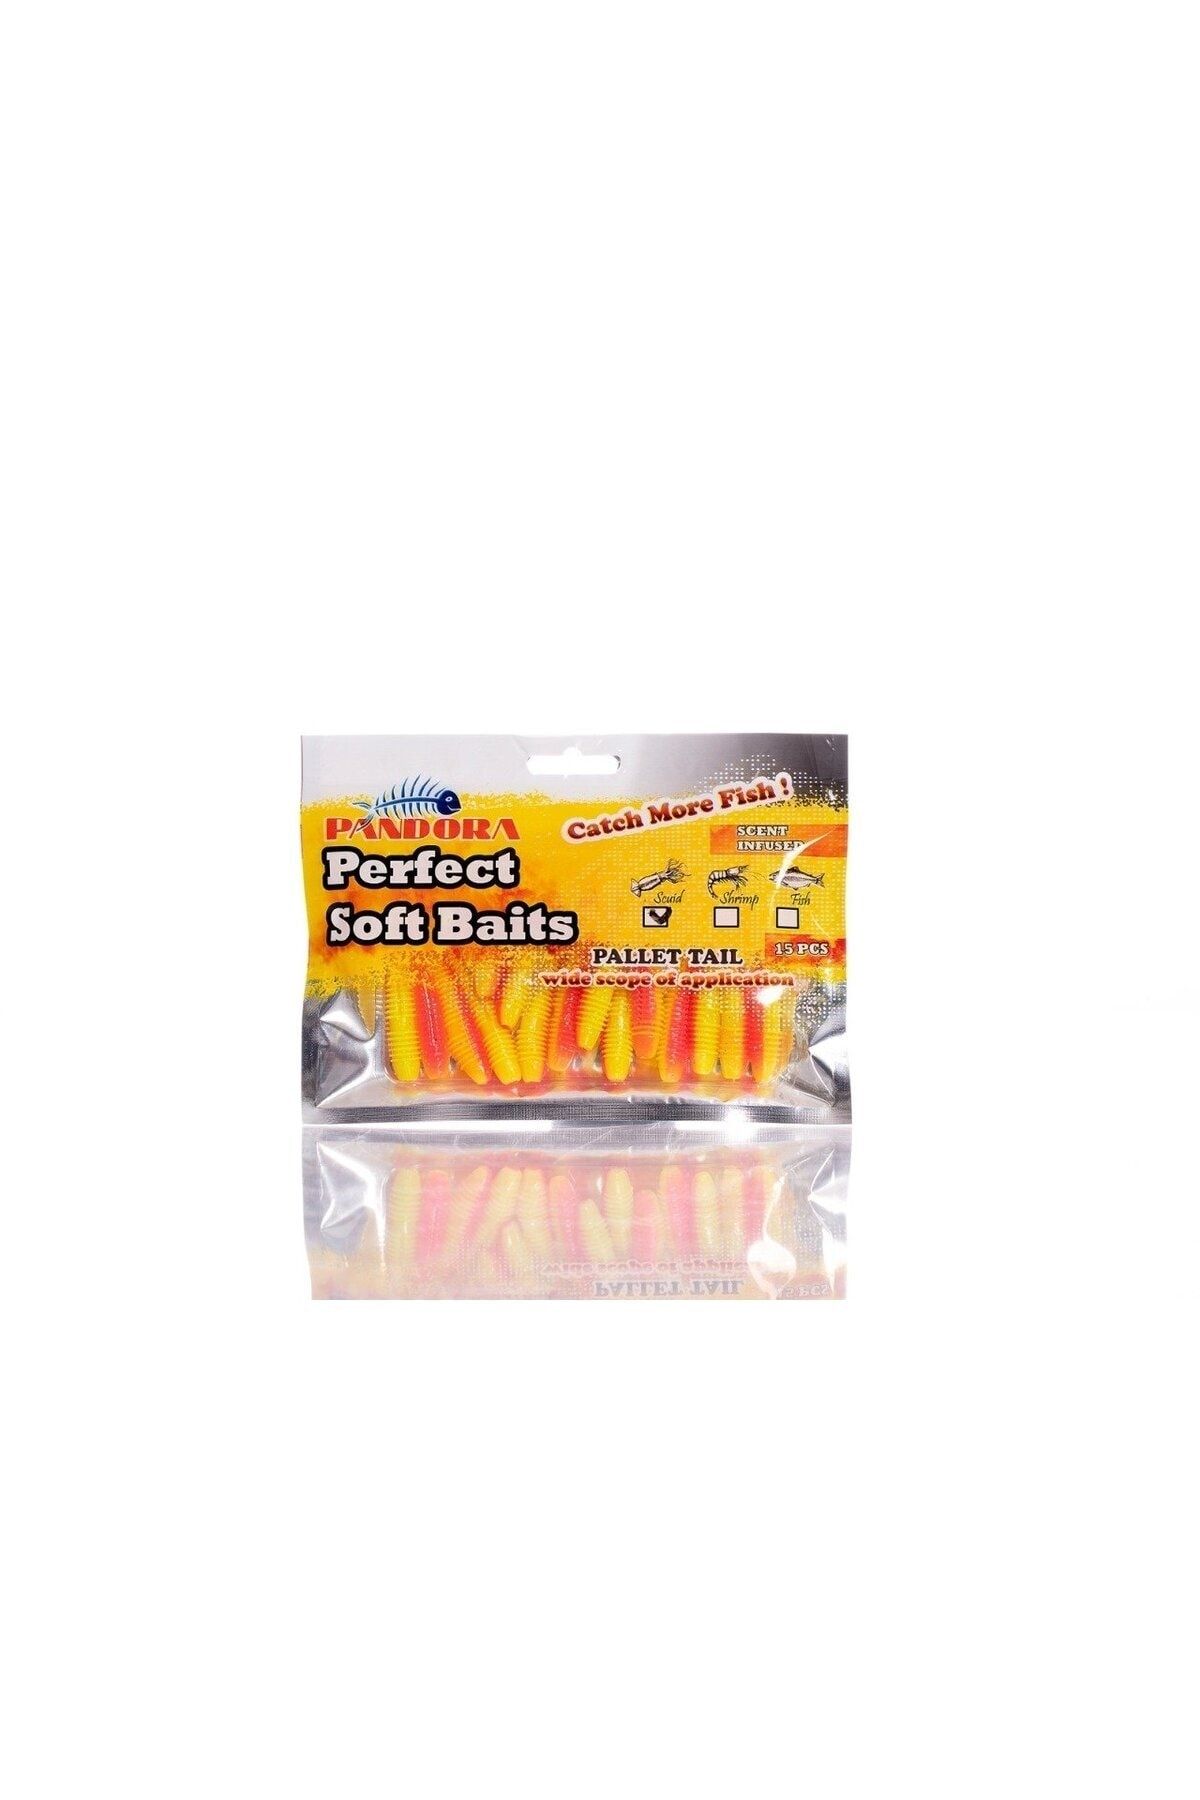 PANDORA BALIKÇILIK Pandora Perfect Soft Baits Pallet Tail 7 Cm (15'Li  Paket) PINK LEMON Fiyatı, Yorumları - Trendyol